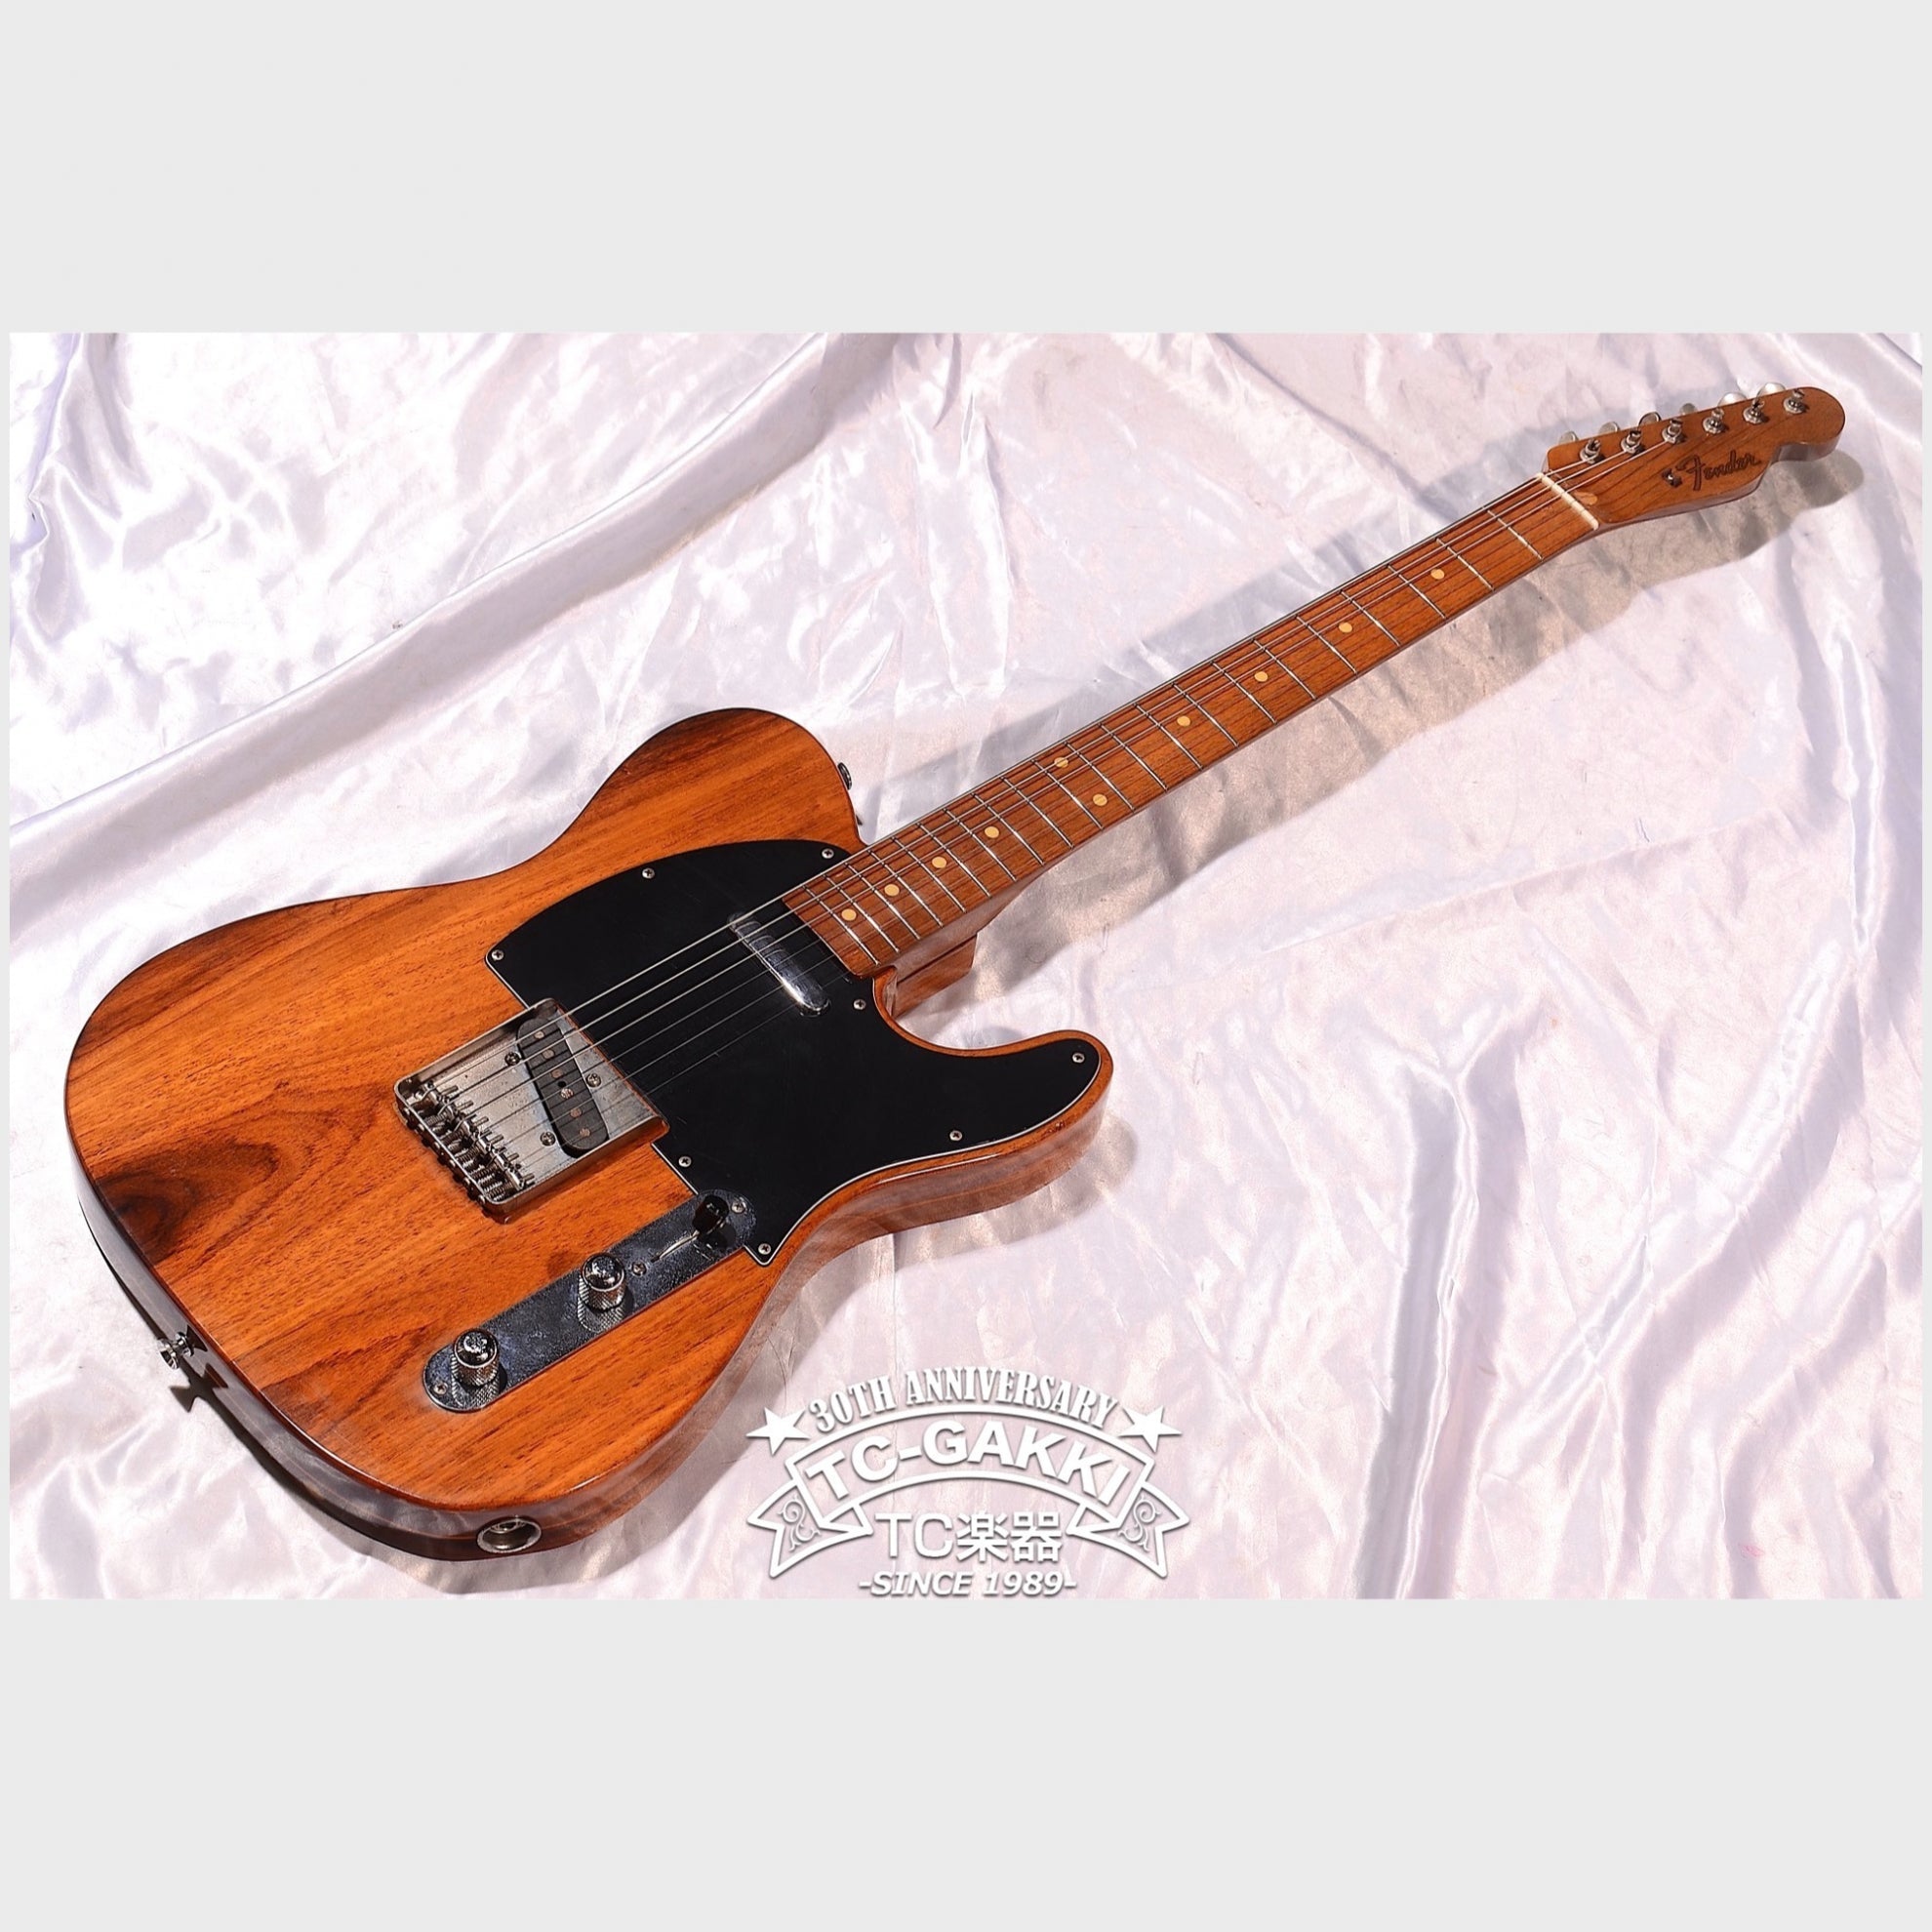 Fender Japan: TL69 “All Rose Telecaster”